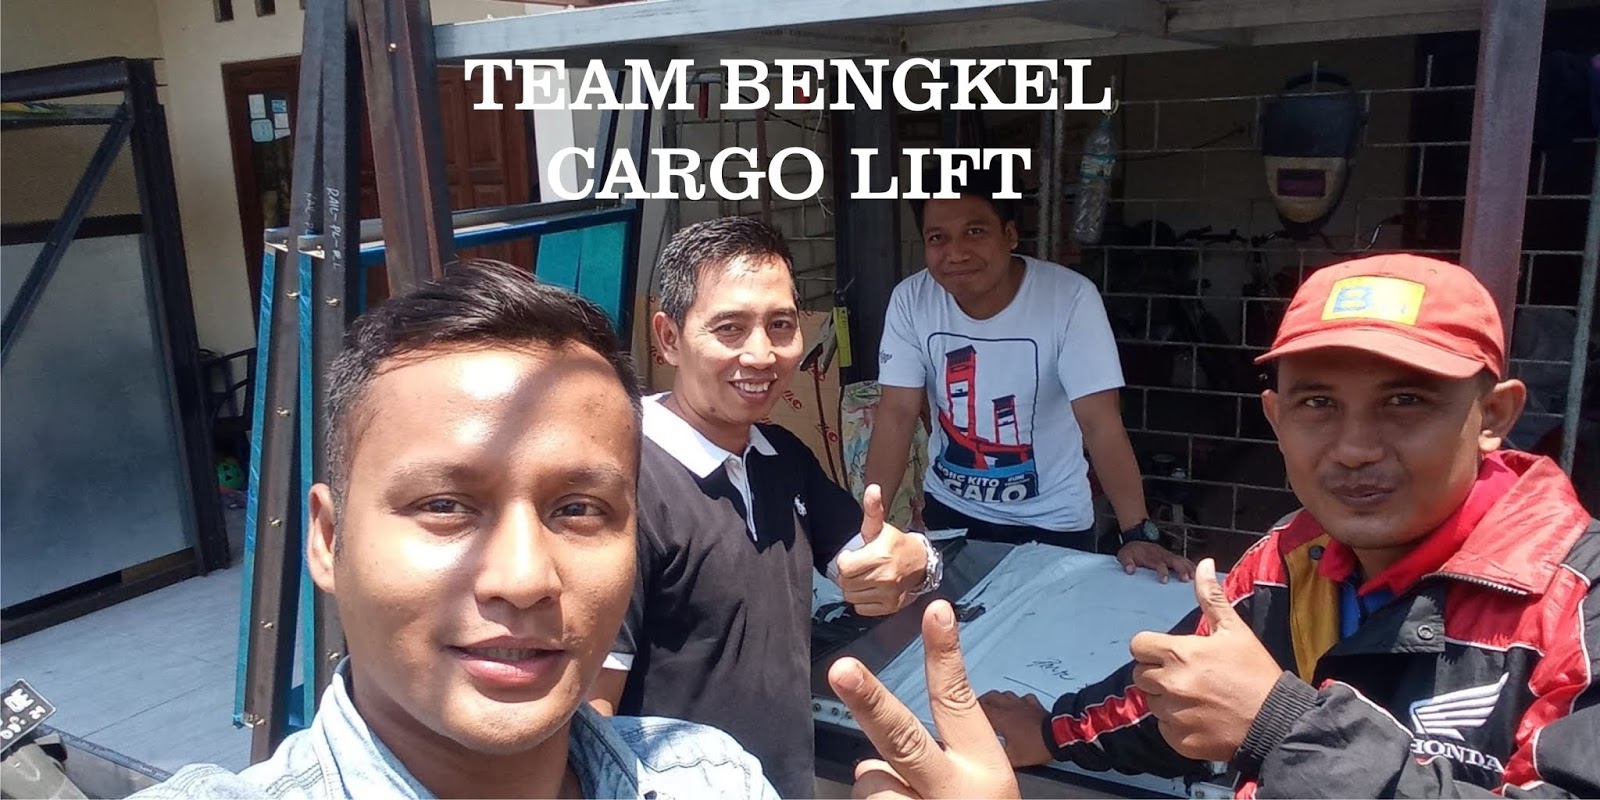 Bengkel cargo lift